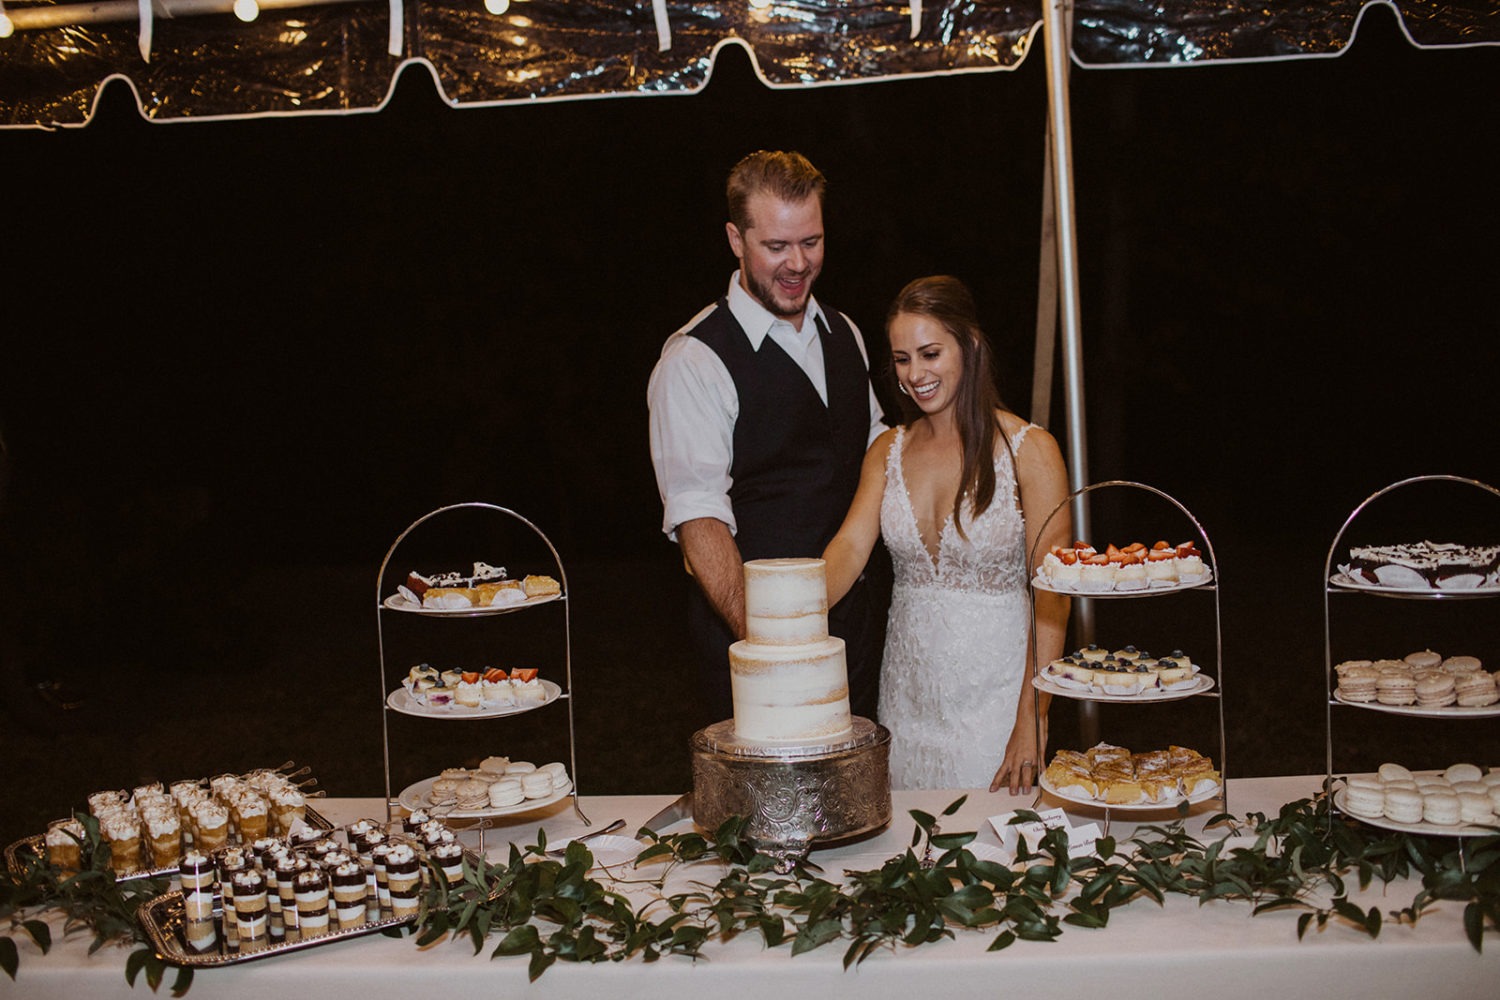 Couple cuts cakes at backyard wedding reception